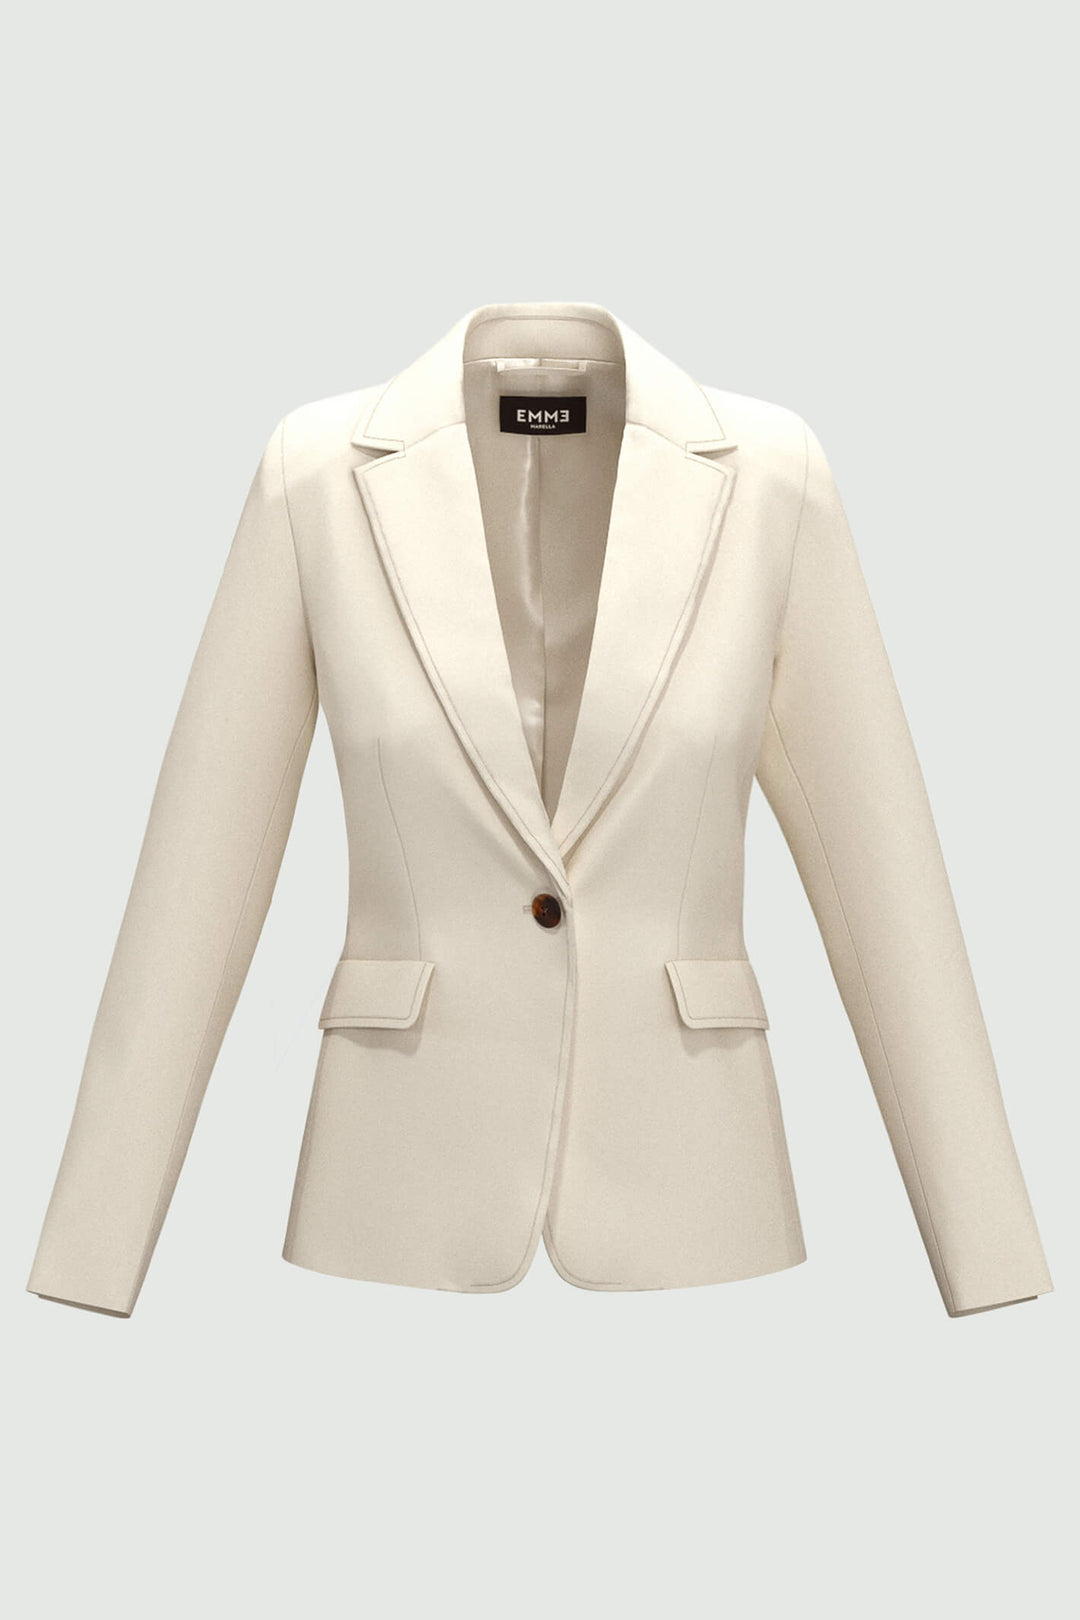 Emme Dea 2350460538200 Cream One Button Jacket - Olivia Grace Fashion